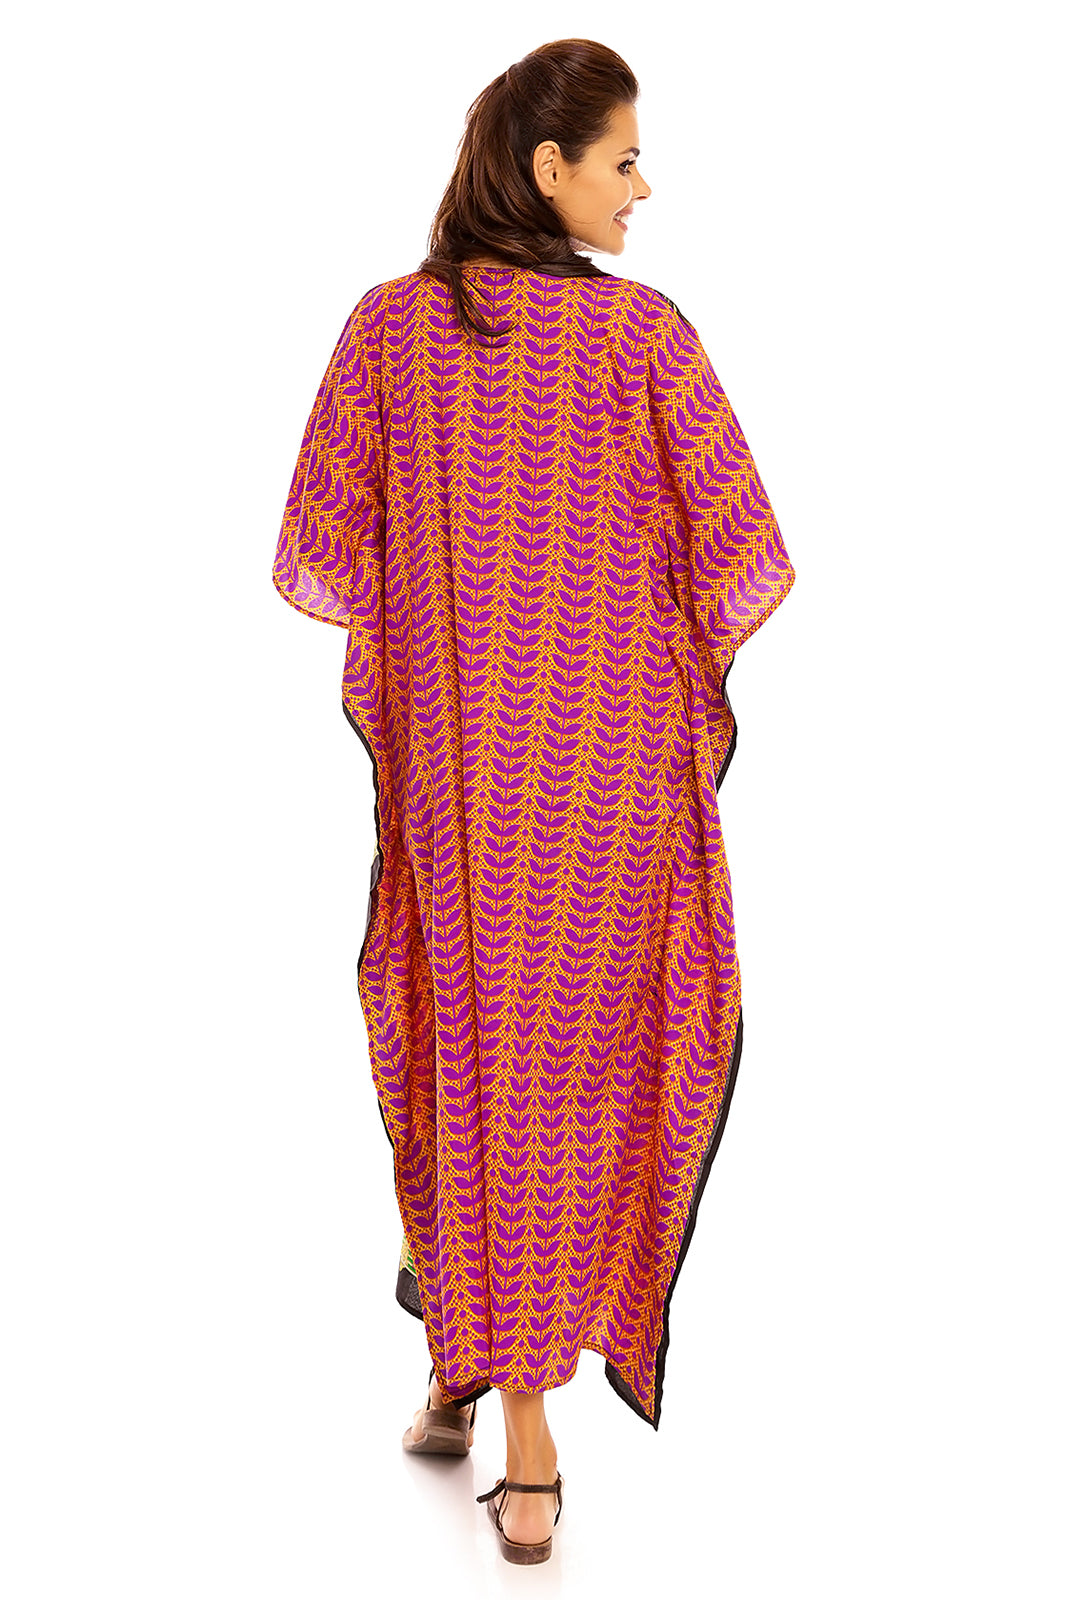 Ladies Hooded Kimono Gown Kaftan in Tribal Print  -  Yellow - Pack of 12